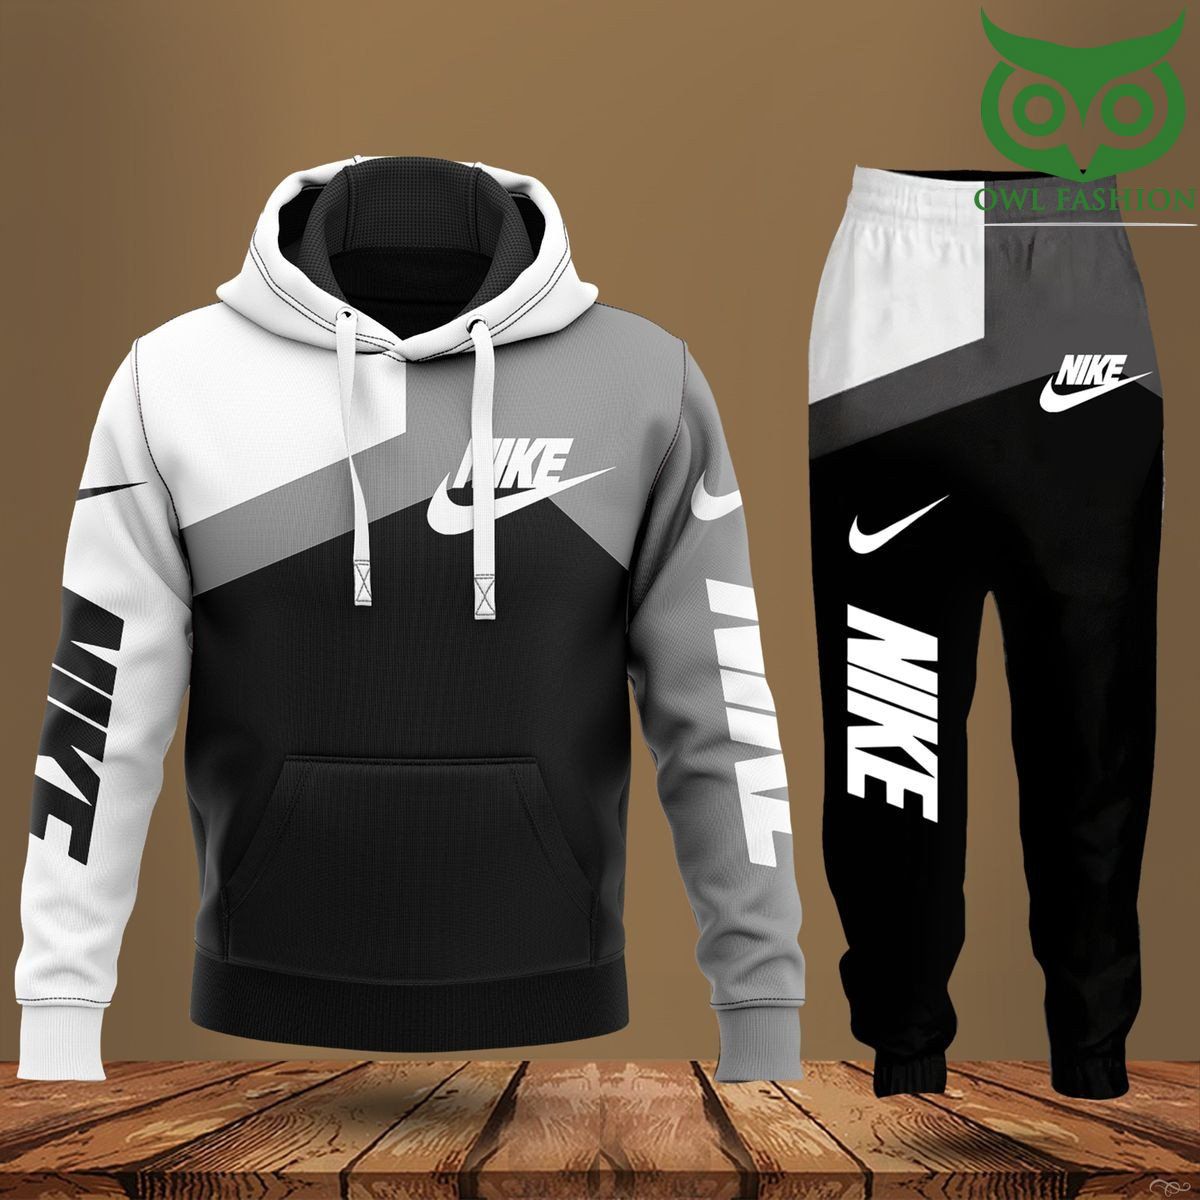 2 Nike black and grey hoodies and sweatpants